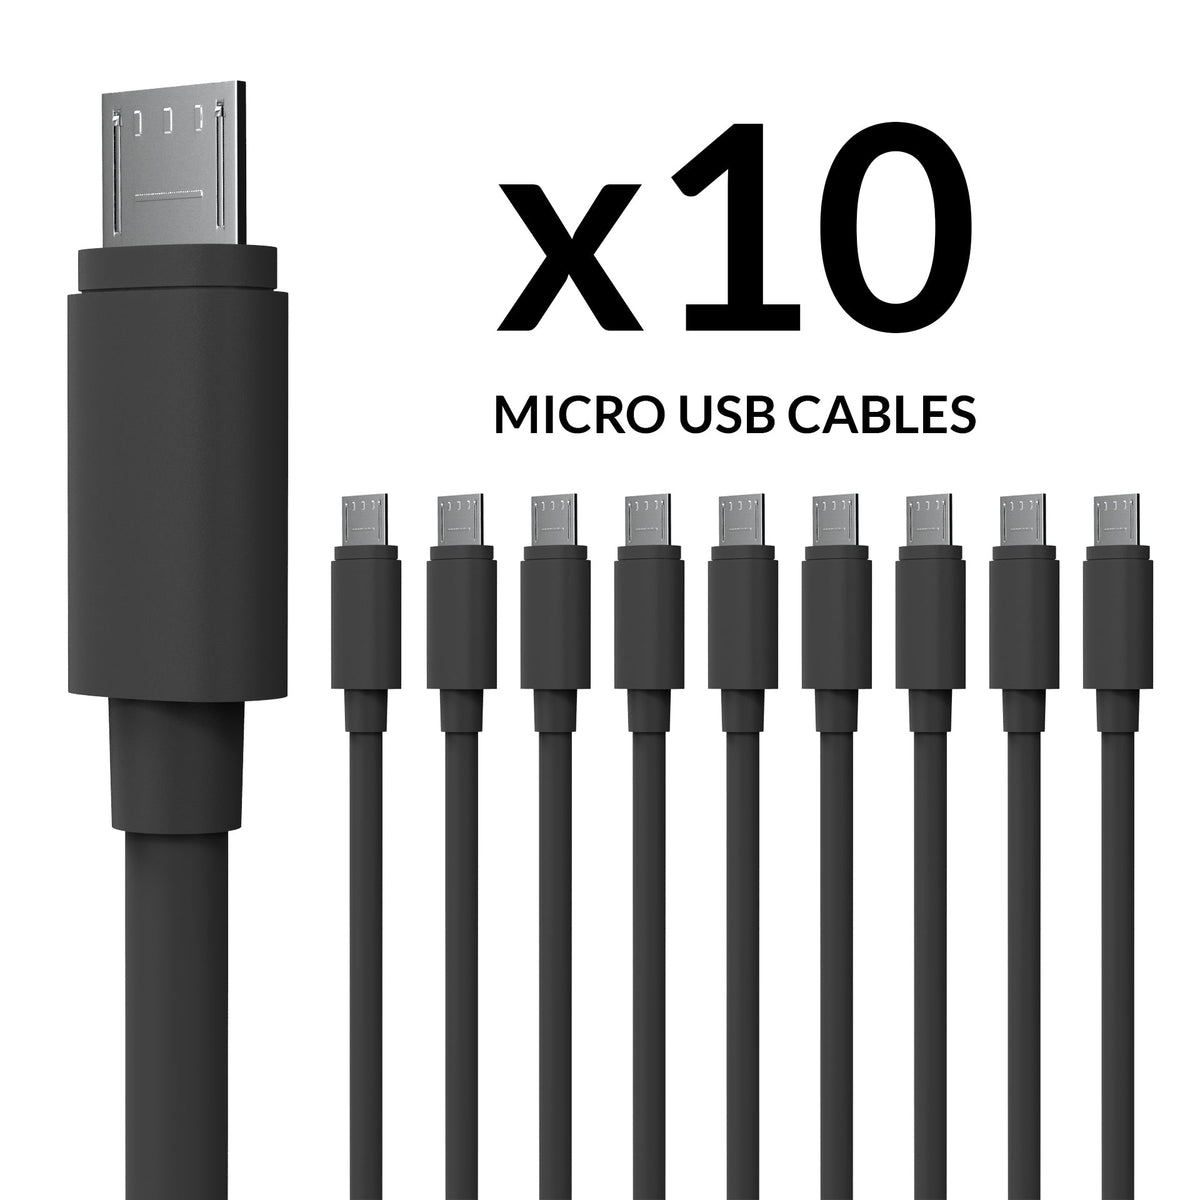 Cable Bundles - Micro